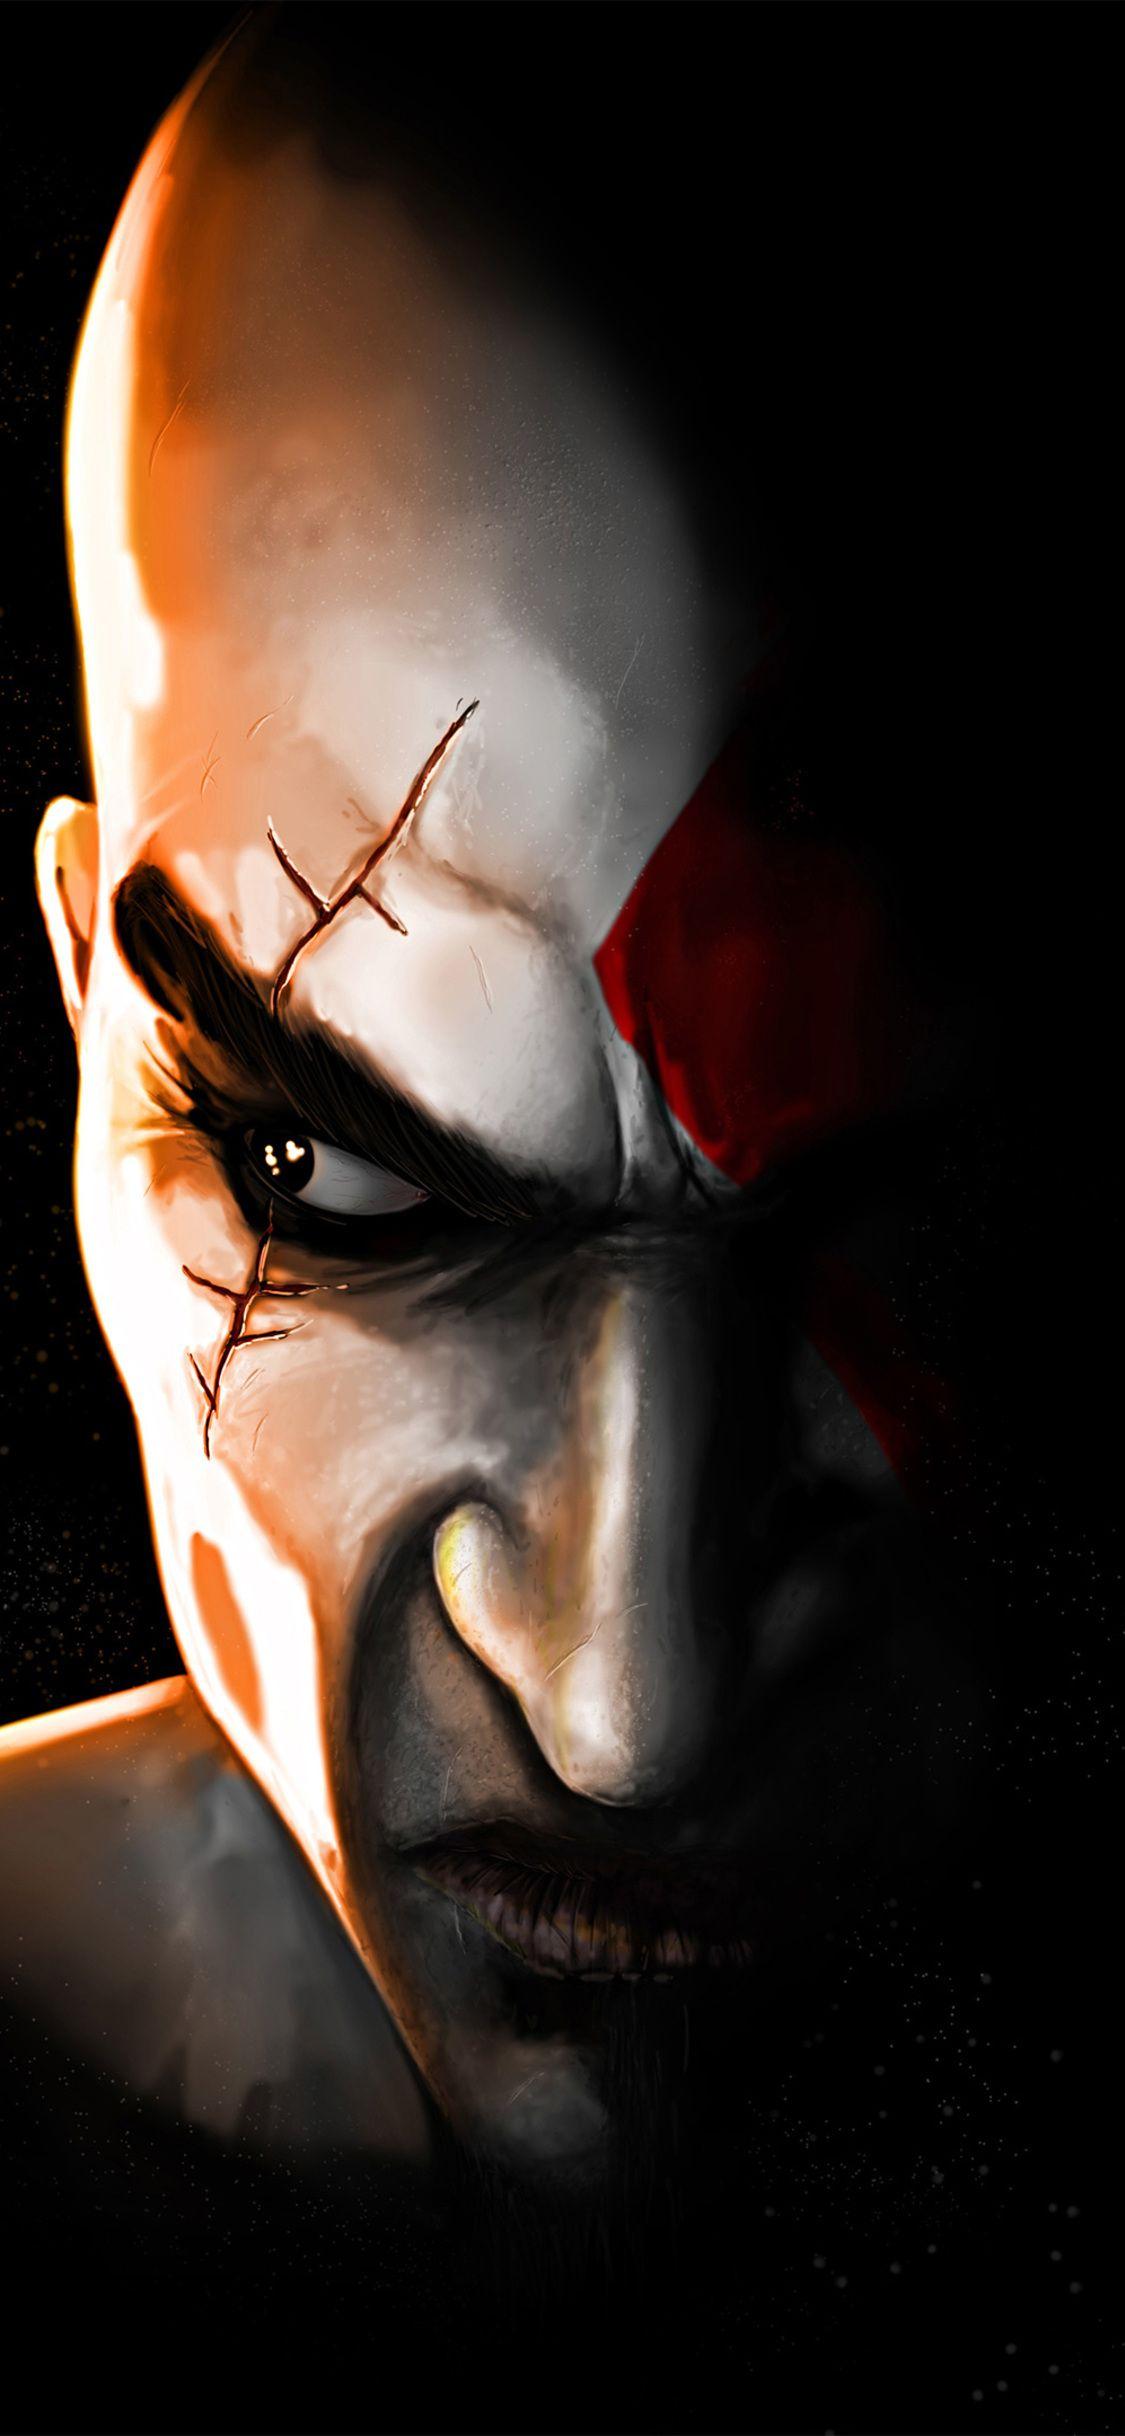 desktophdwallpaper.org. Phone wallpaper image, Kratos god of war, Wallpaper